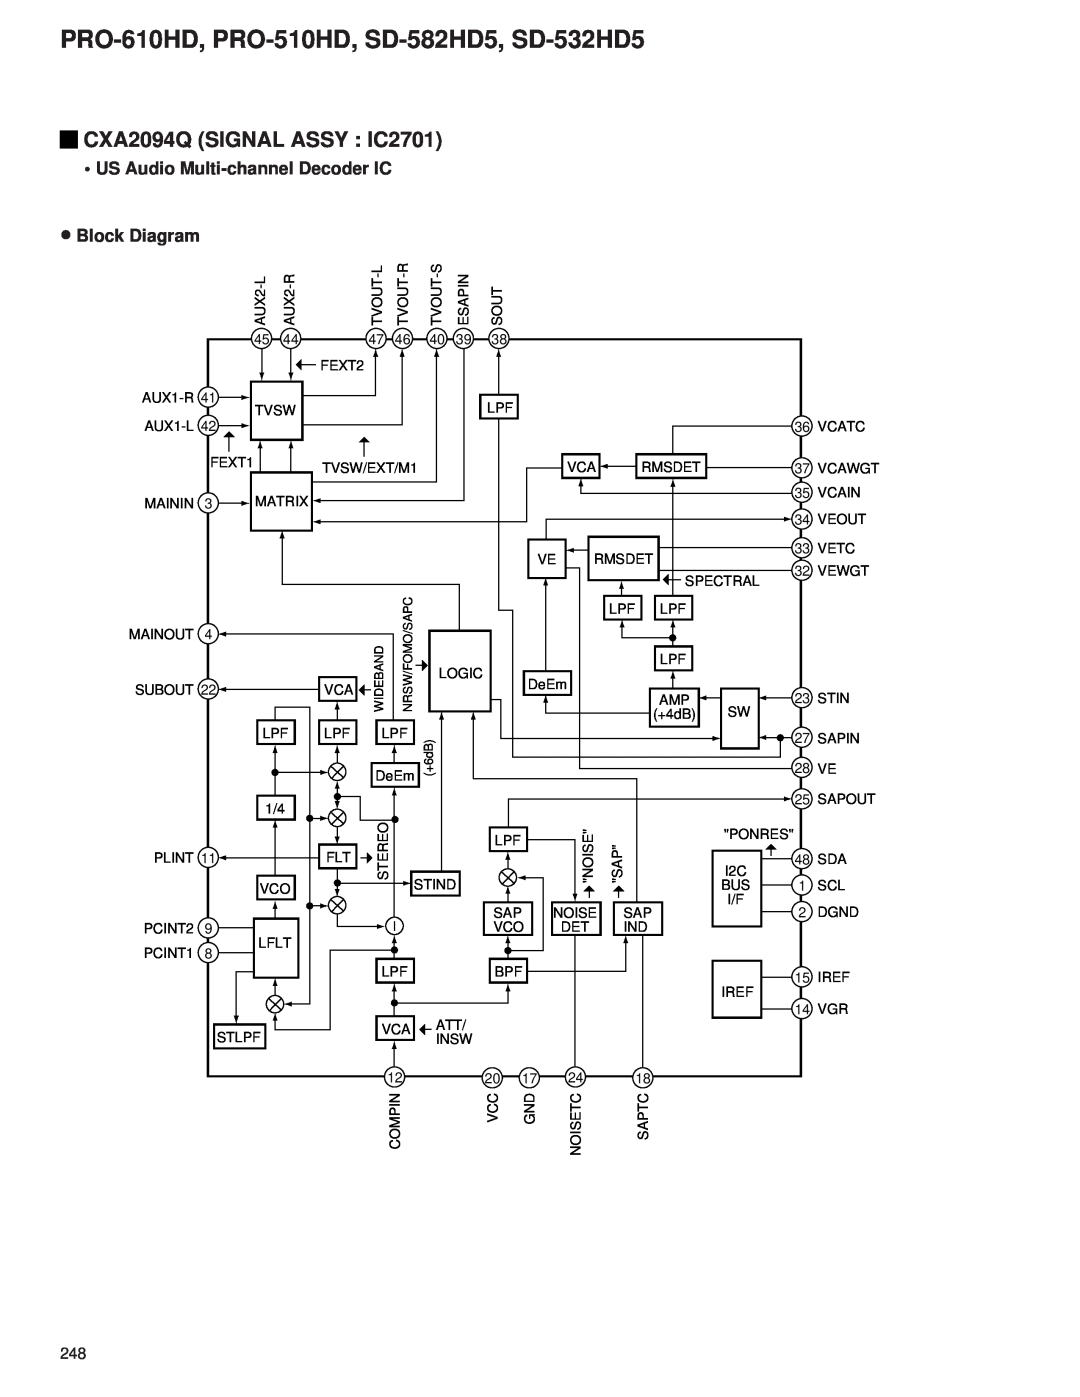 Pioneer PRO-610HD, PRO-510HD service manual CXA2094Q SIGNAL ASSY IC2701, US Audio Multi-channel Decoder IC ∙ Block Diagram 